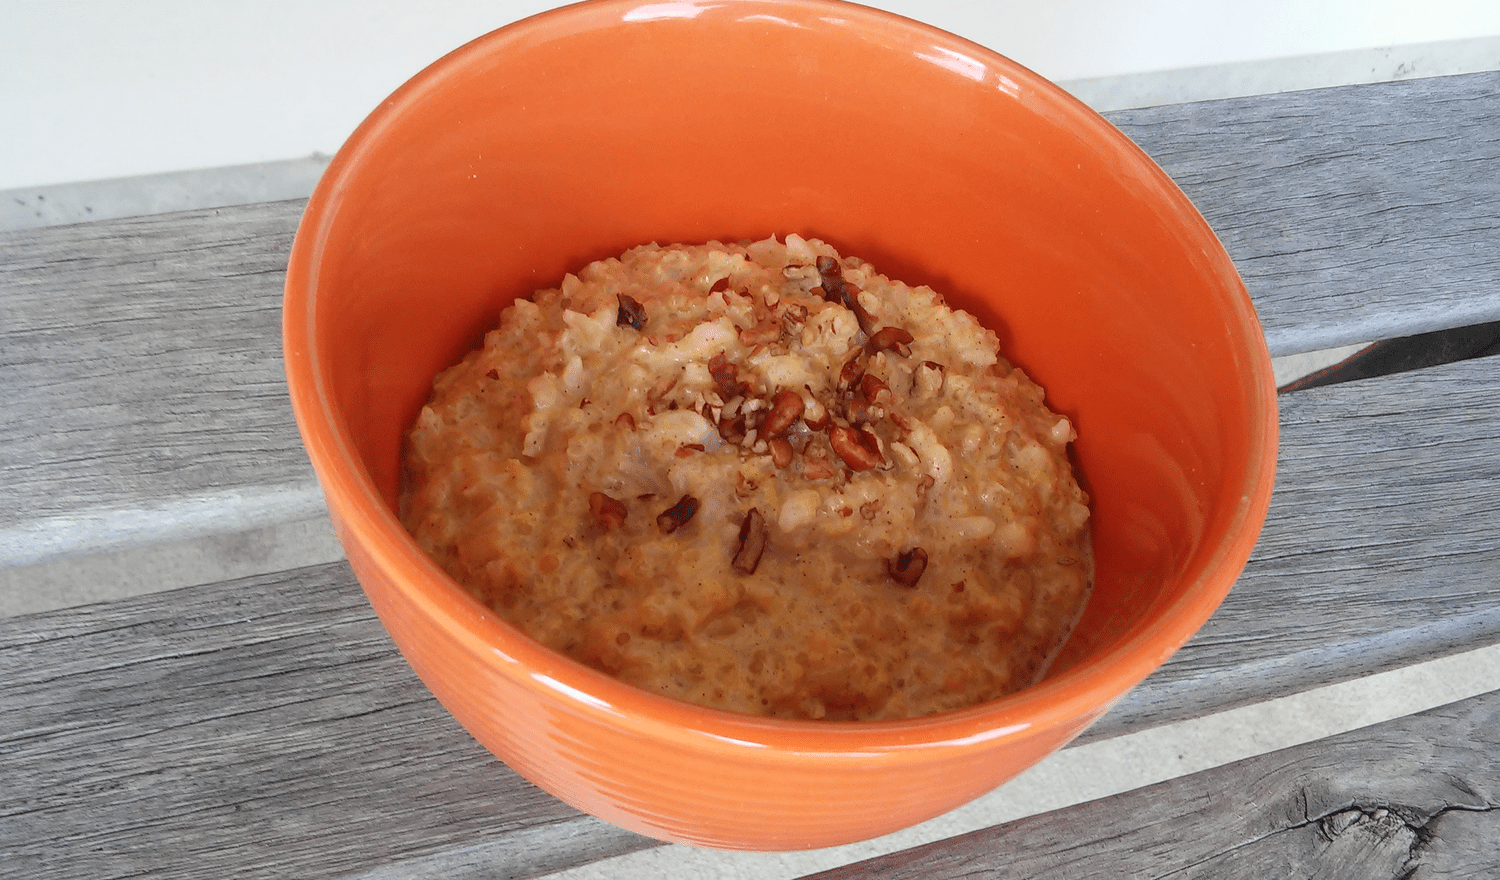 Rice and Quinoa Breakfast Pudding